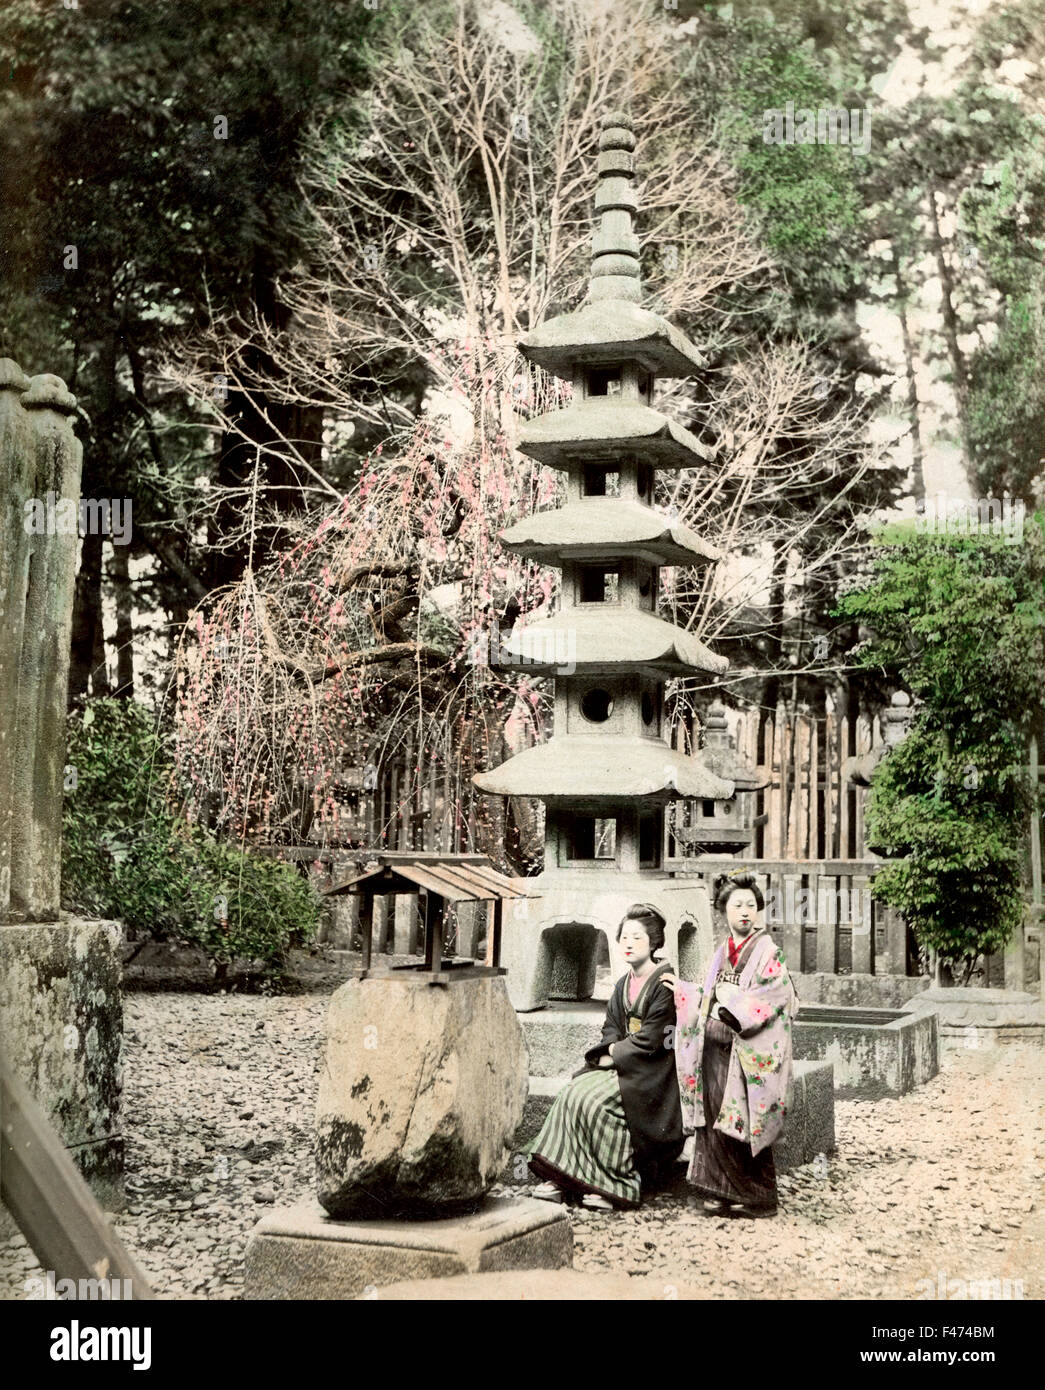 Two women in shrine, Japan Stock Photo